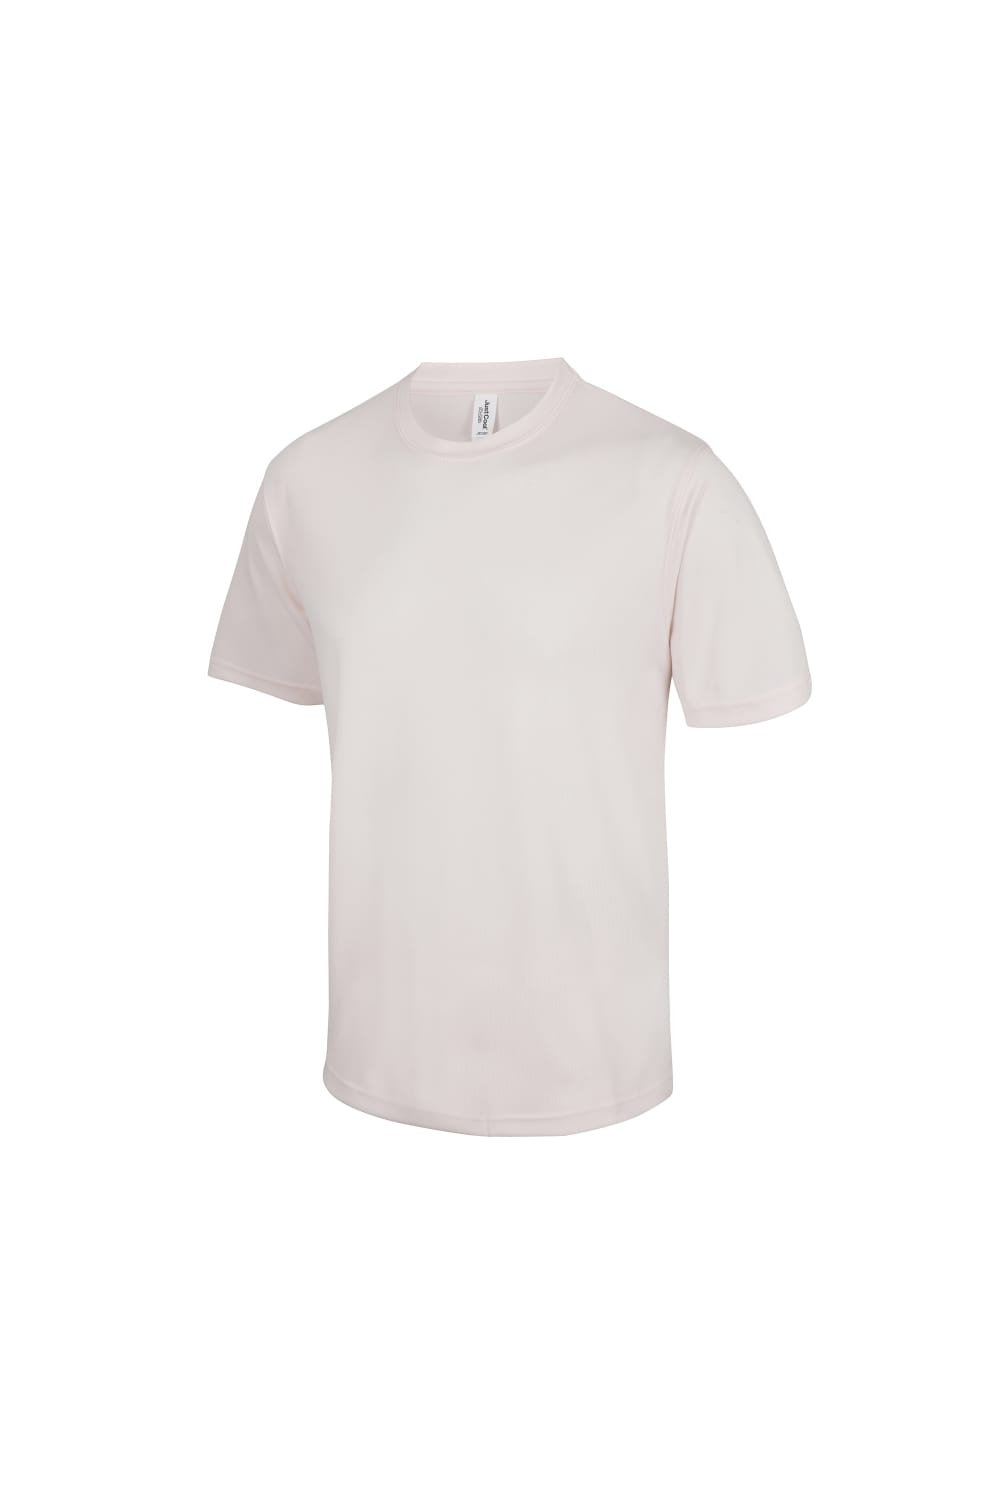 Just Cool Mens Performance Plain T-Shirt (Blush)